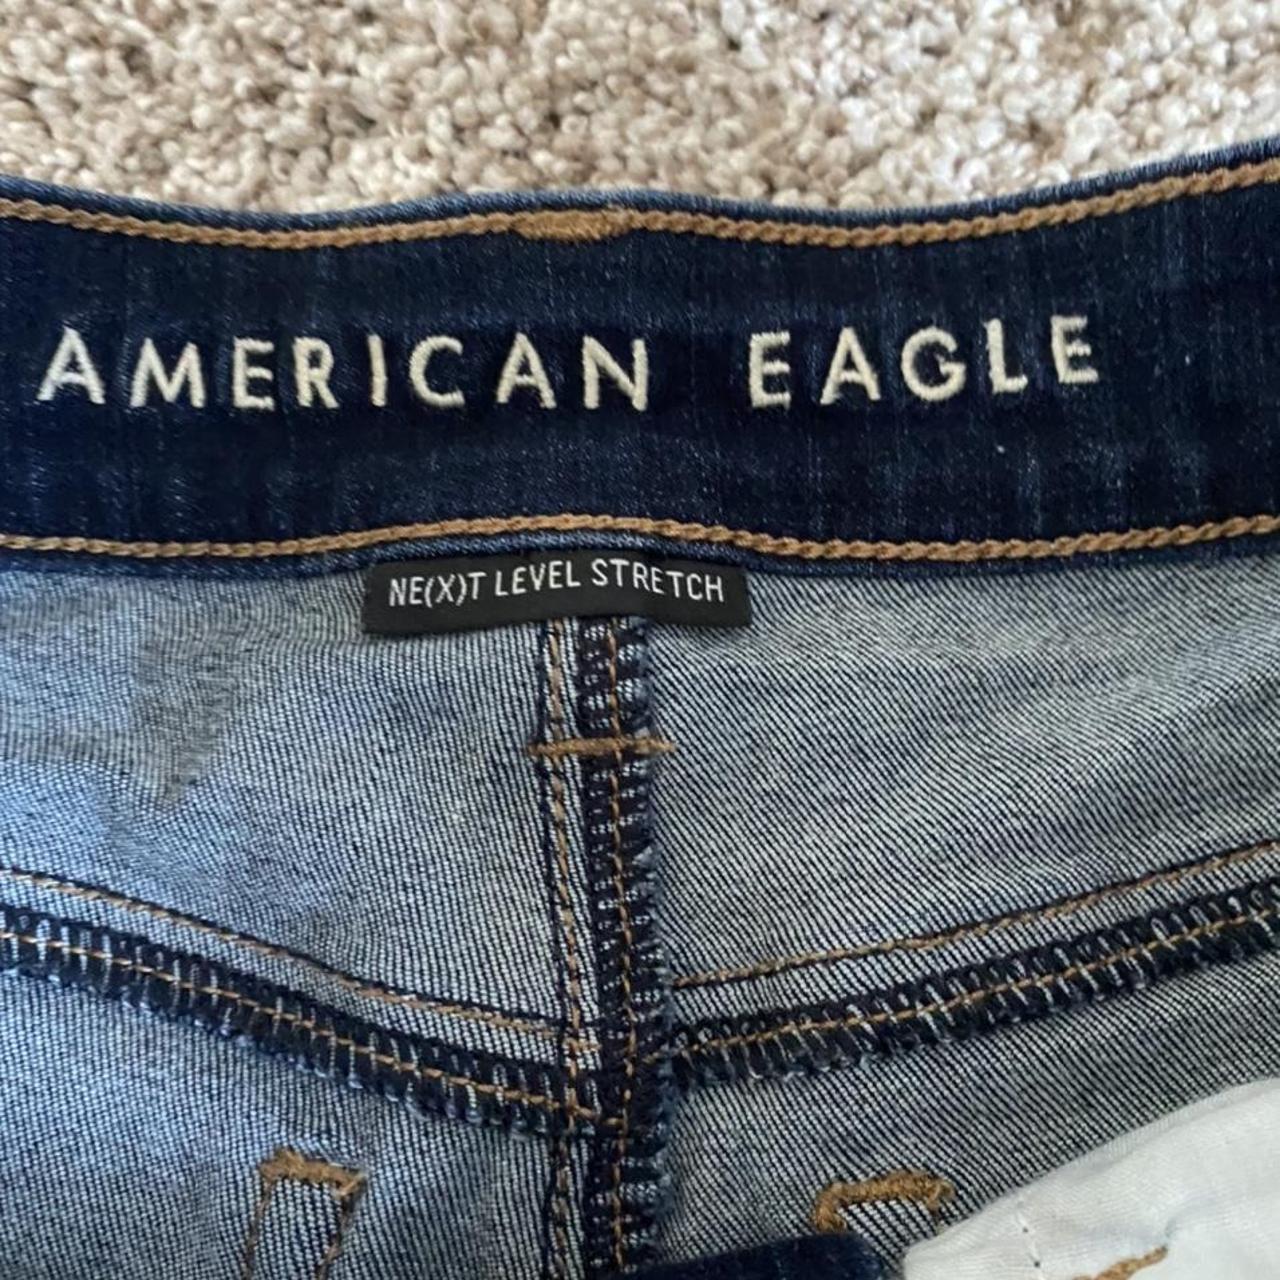 American Eagle Next Level Stretch jean Shorts ☀️ Size... - Depop